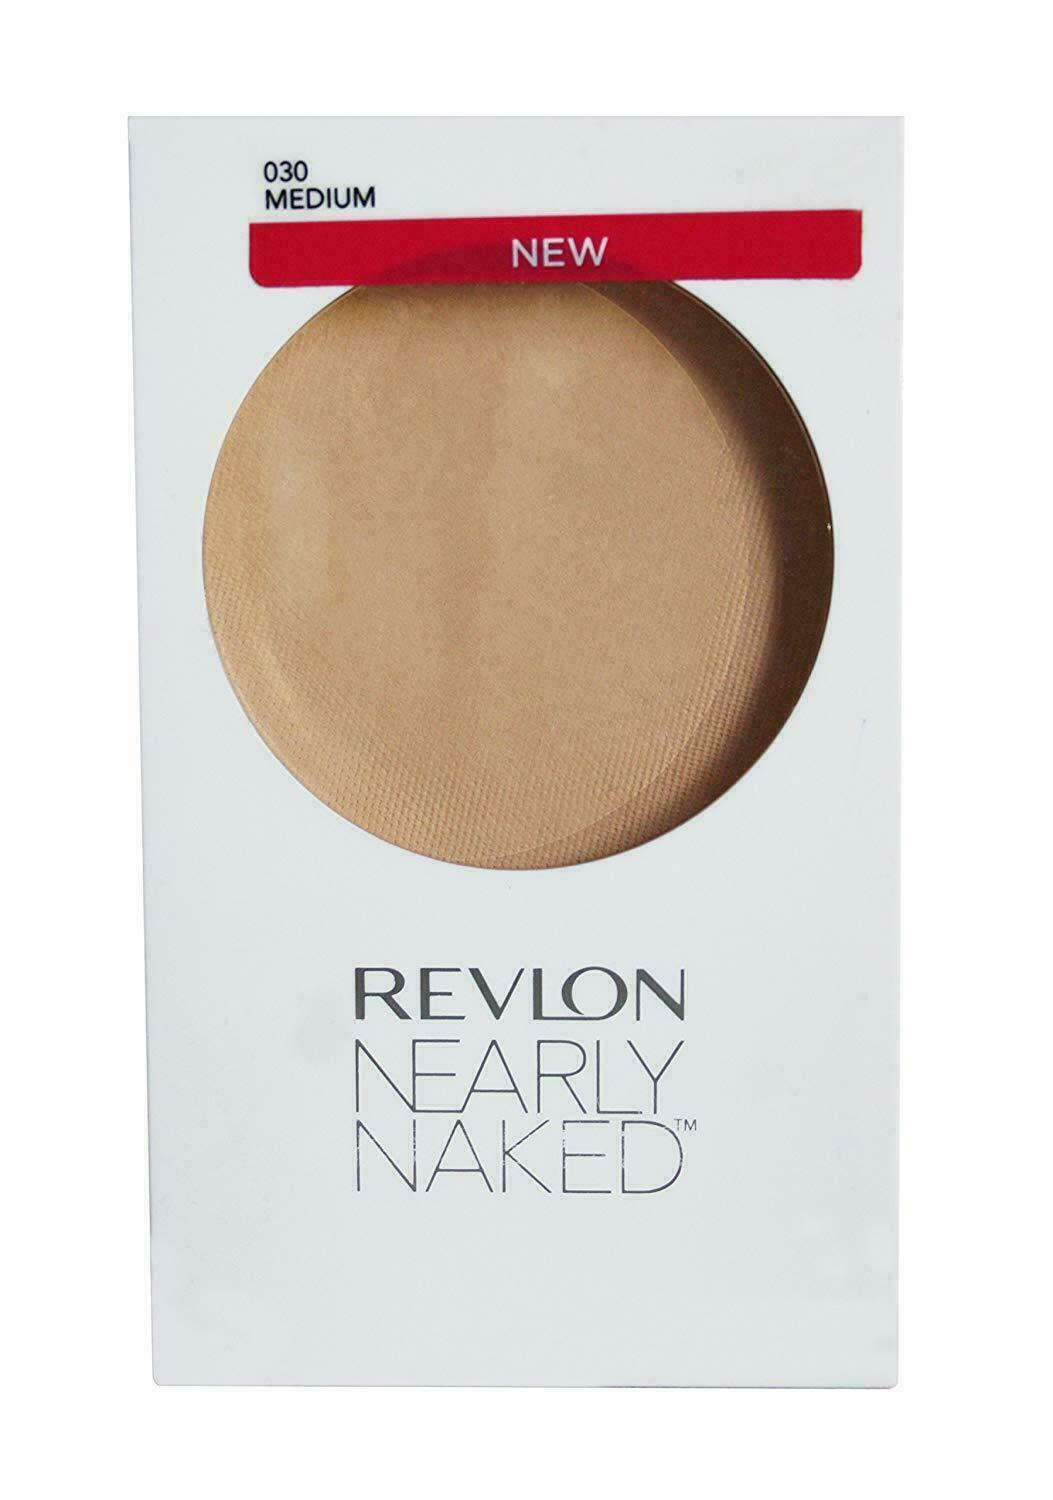 New Revlon Compact Nearly Naked Pressed Powder Medium 8 gm 